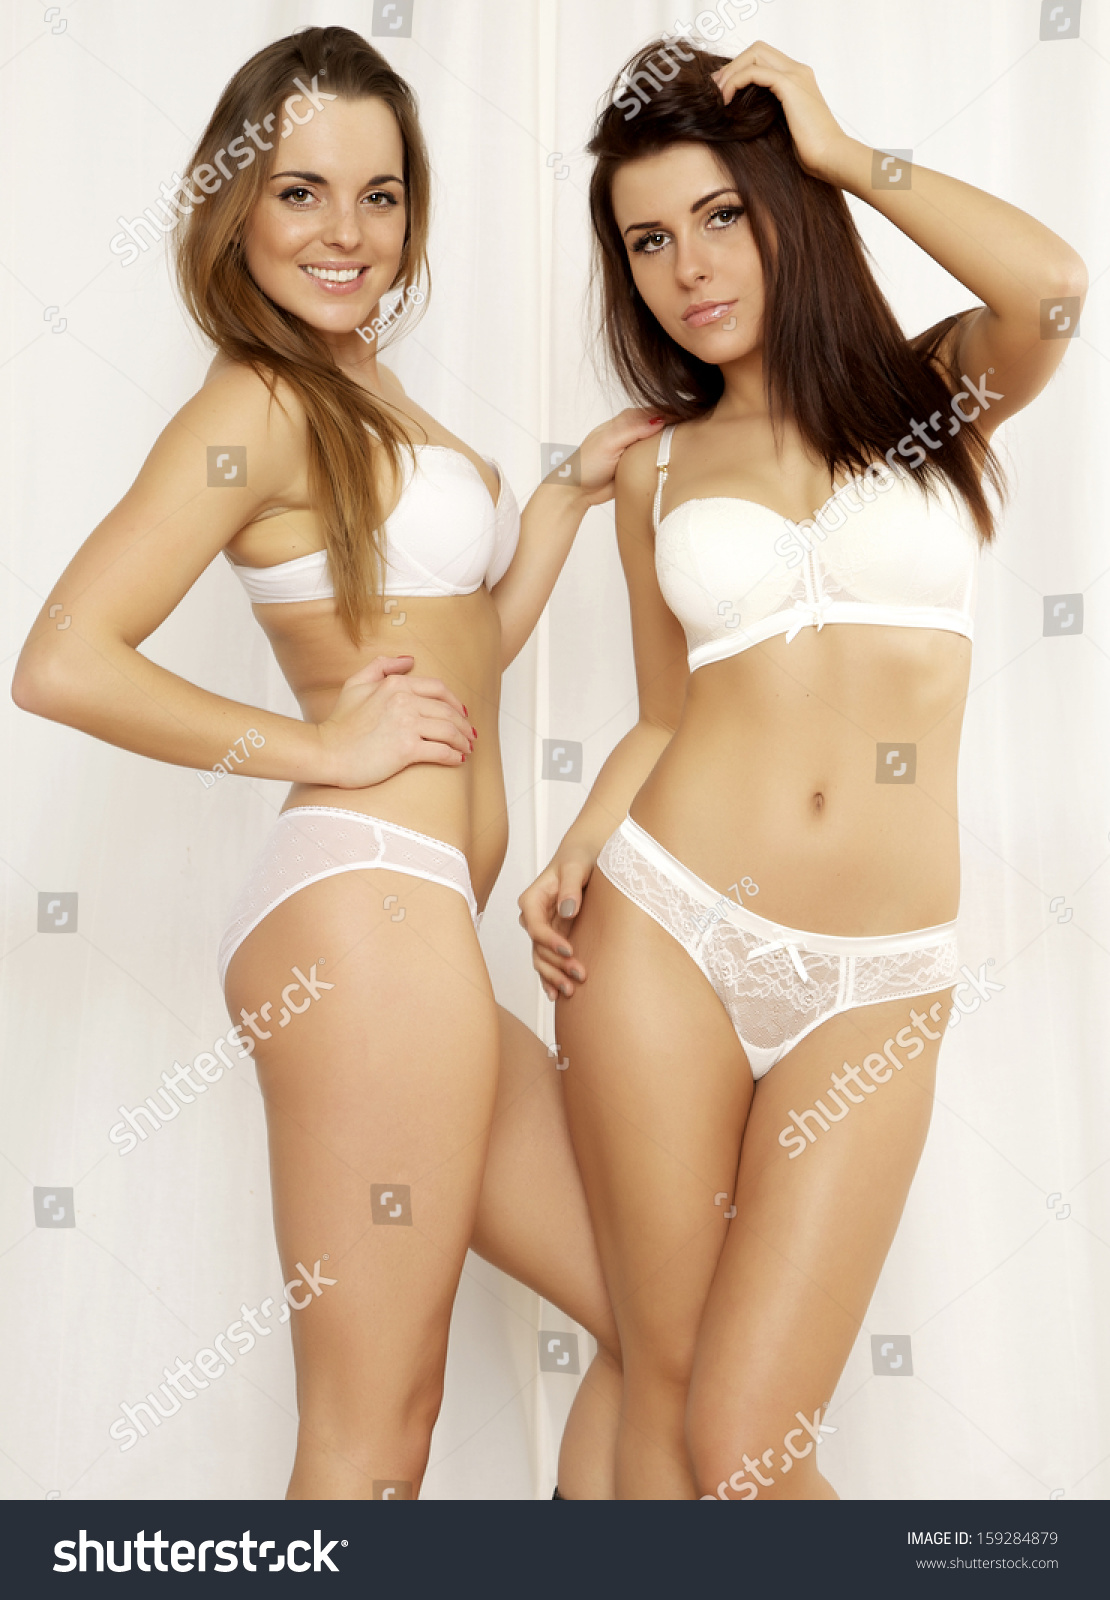 Erotic photography two girls